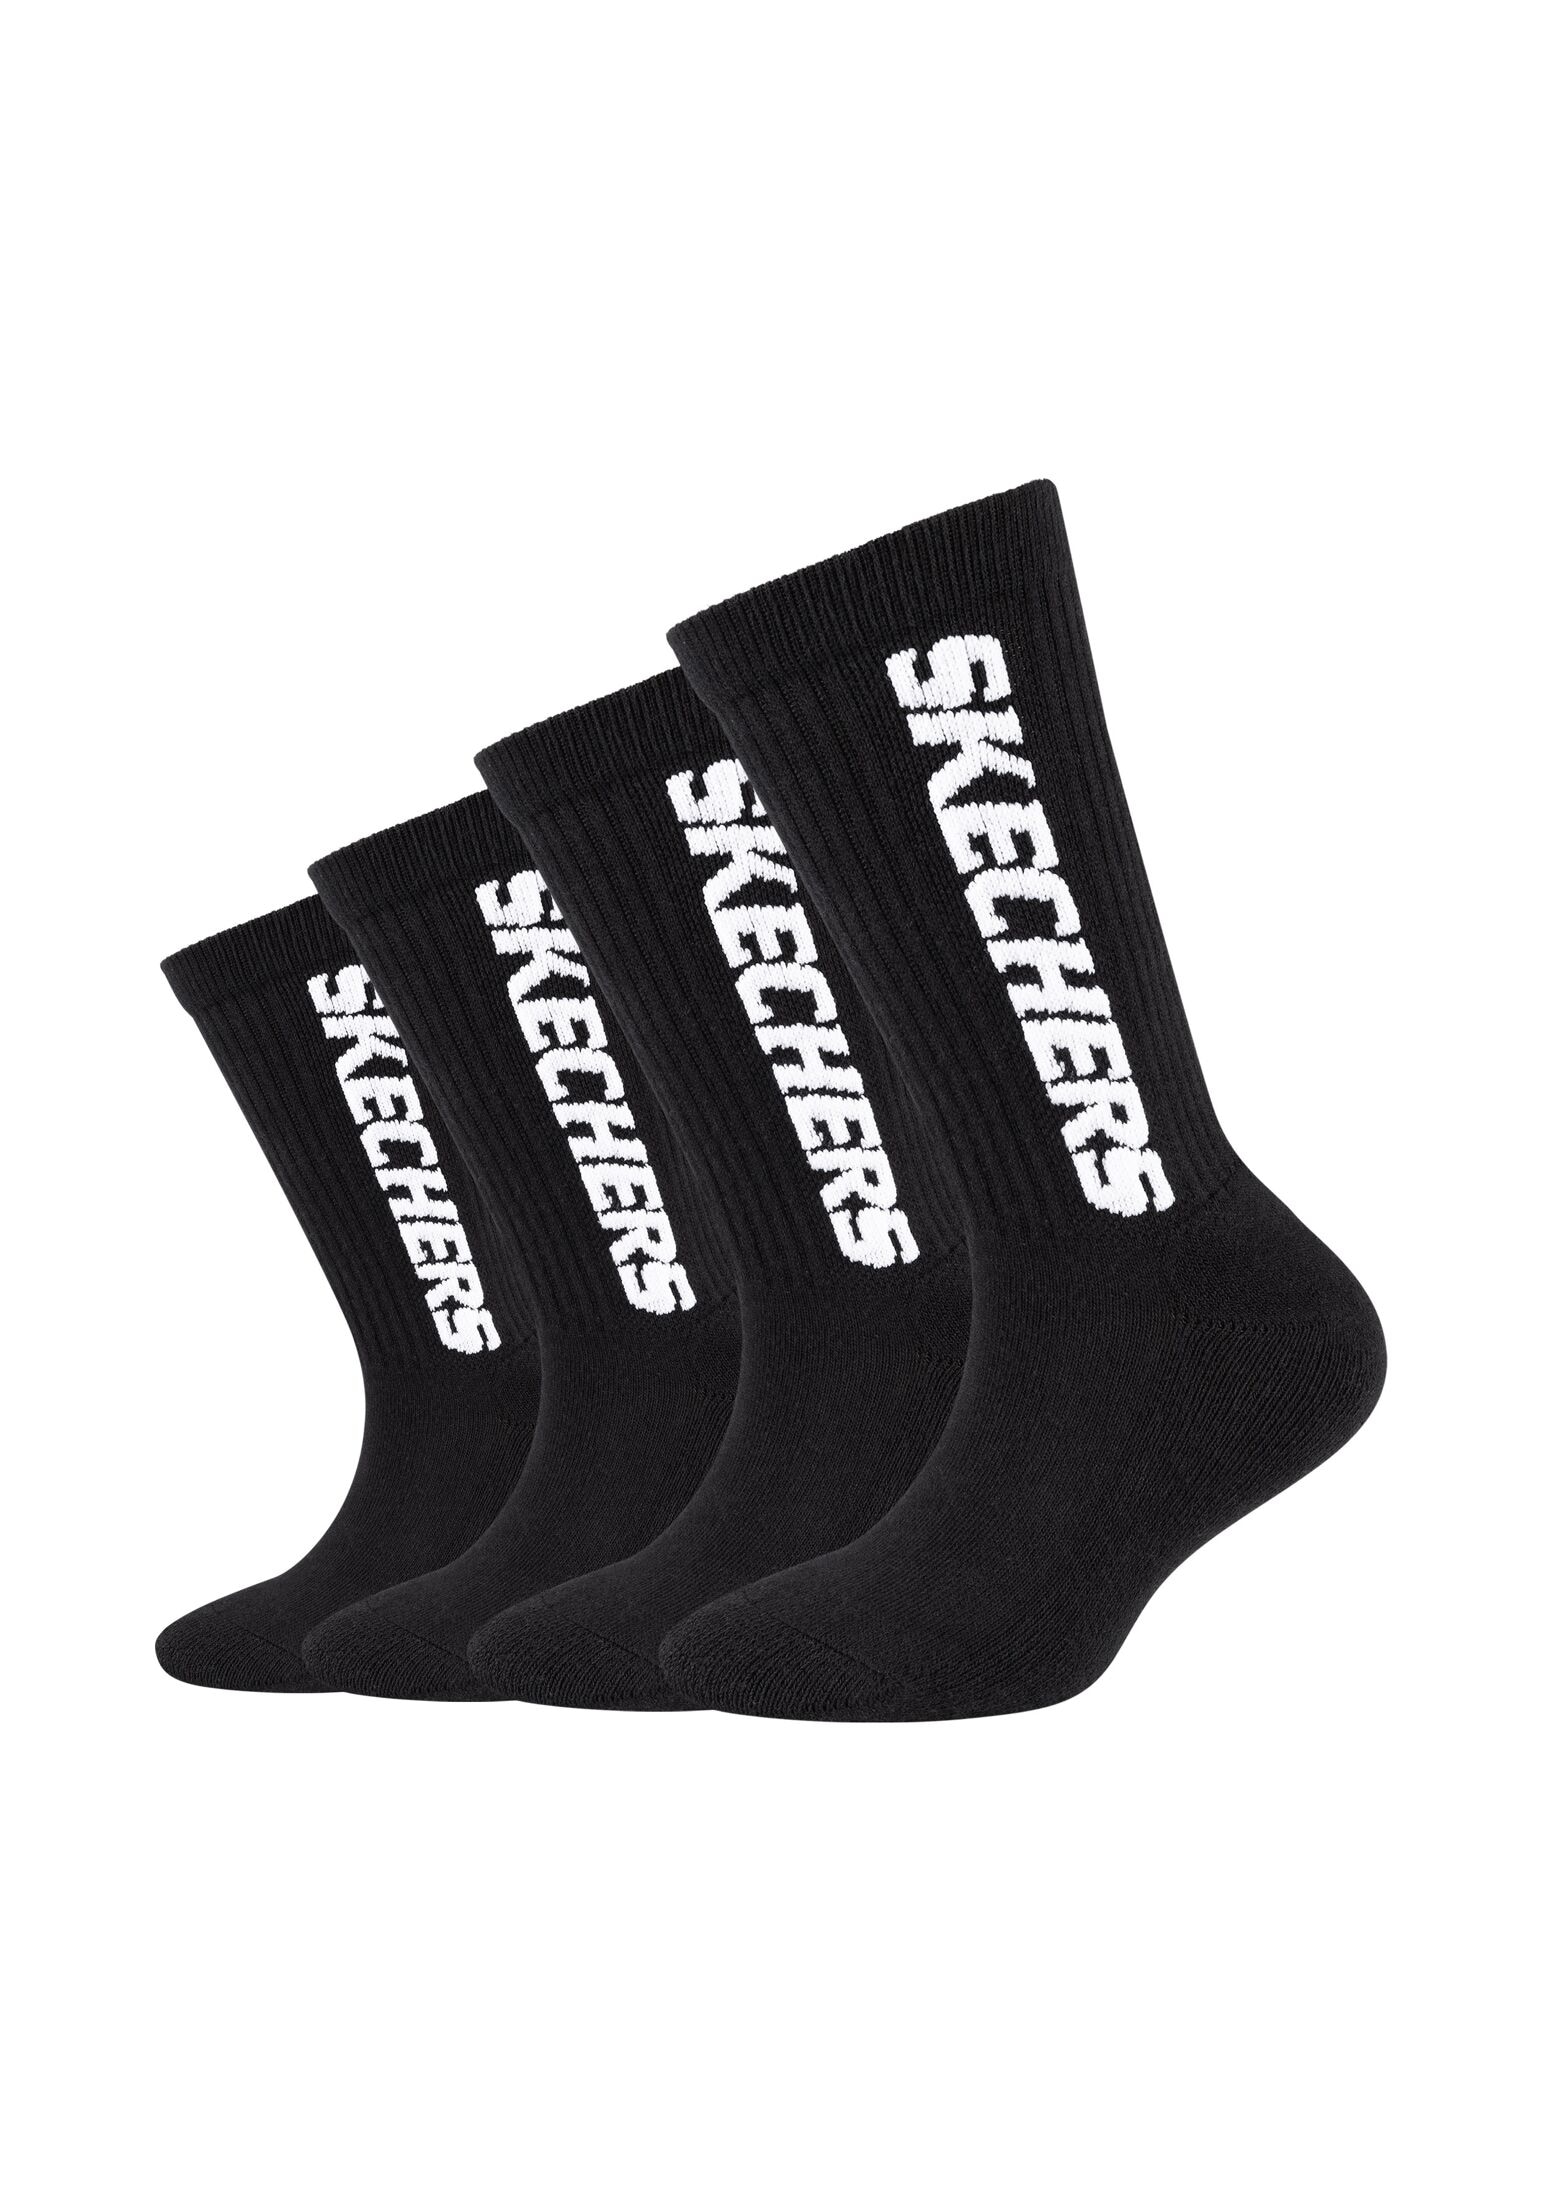 Skechers Socken »Tennissocken 4er Pack« kaufen | I'm walking